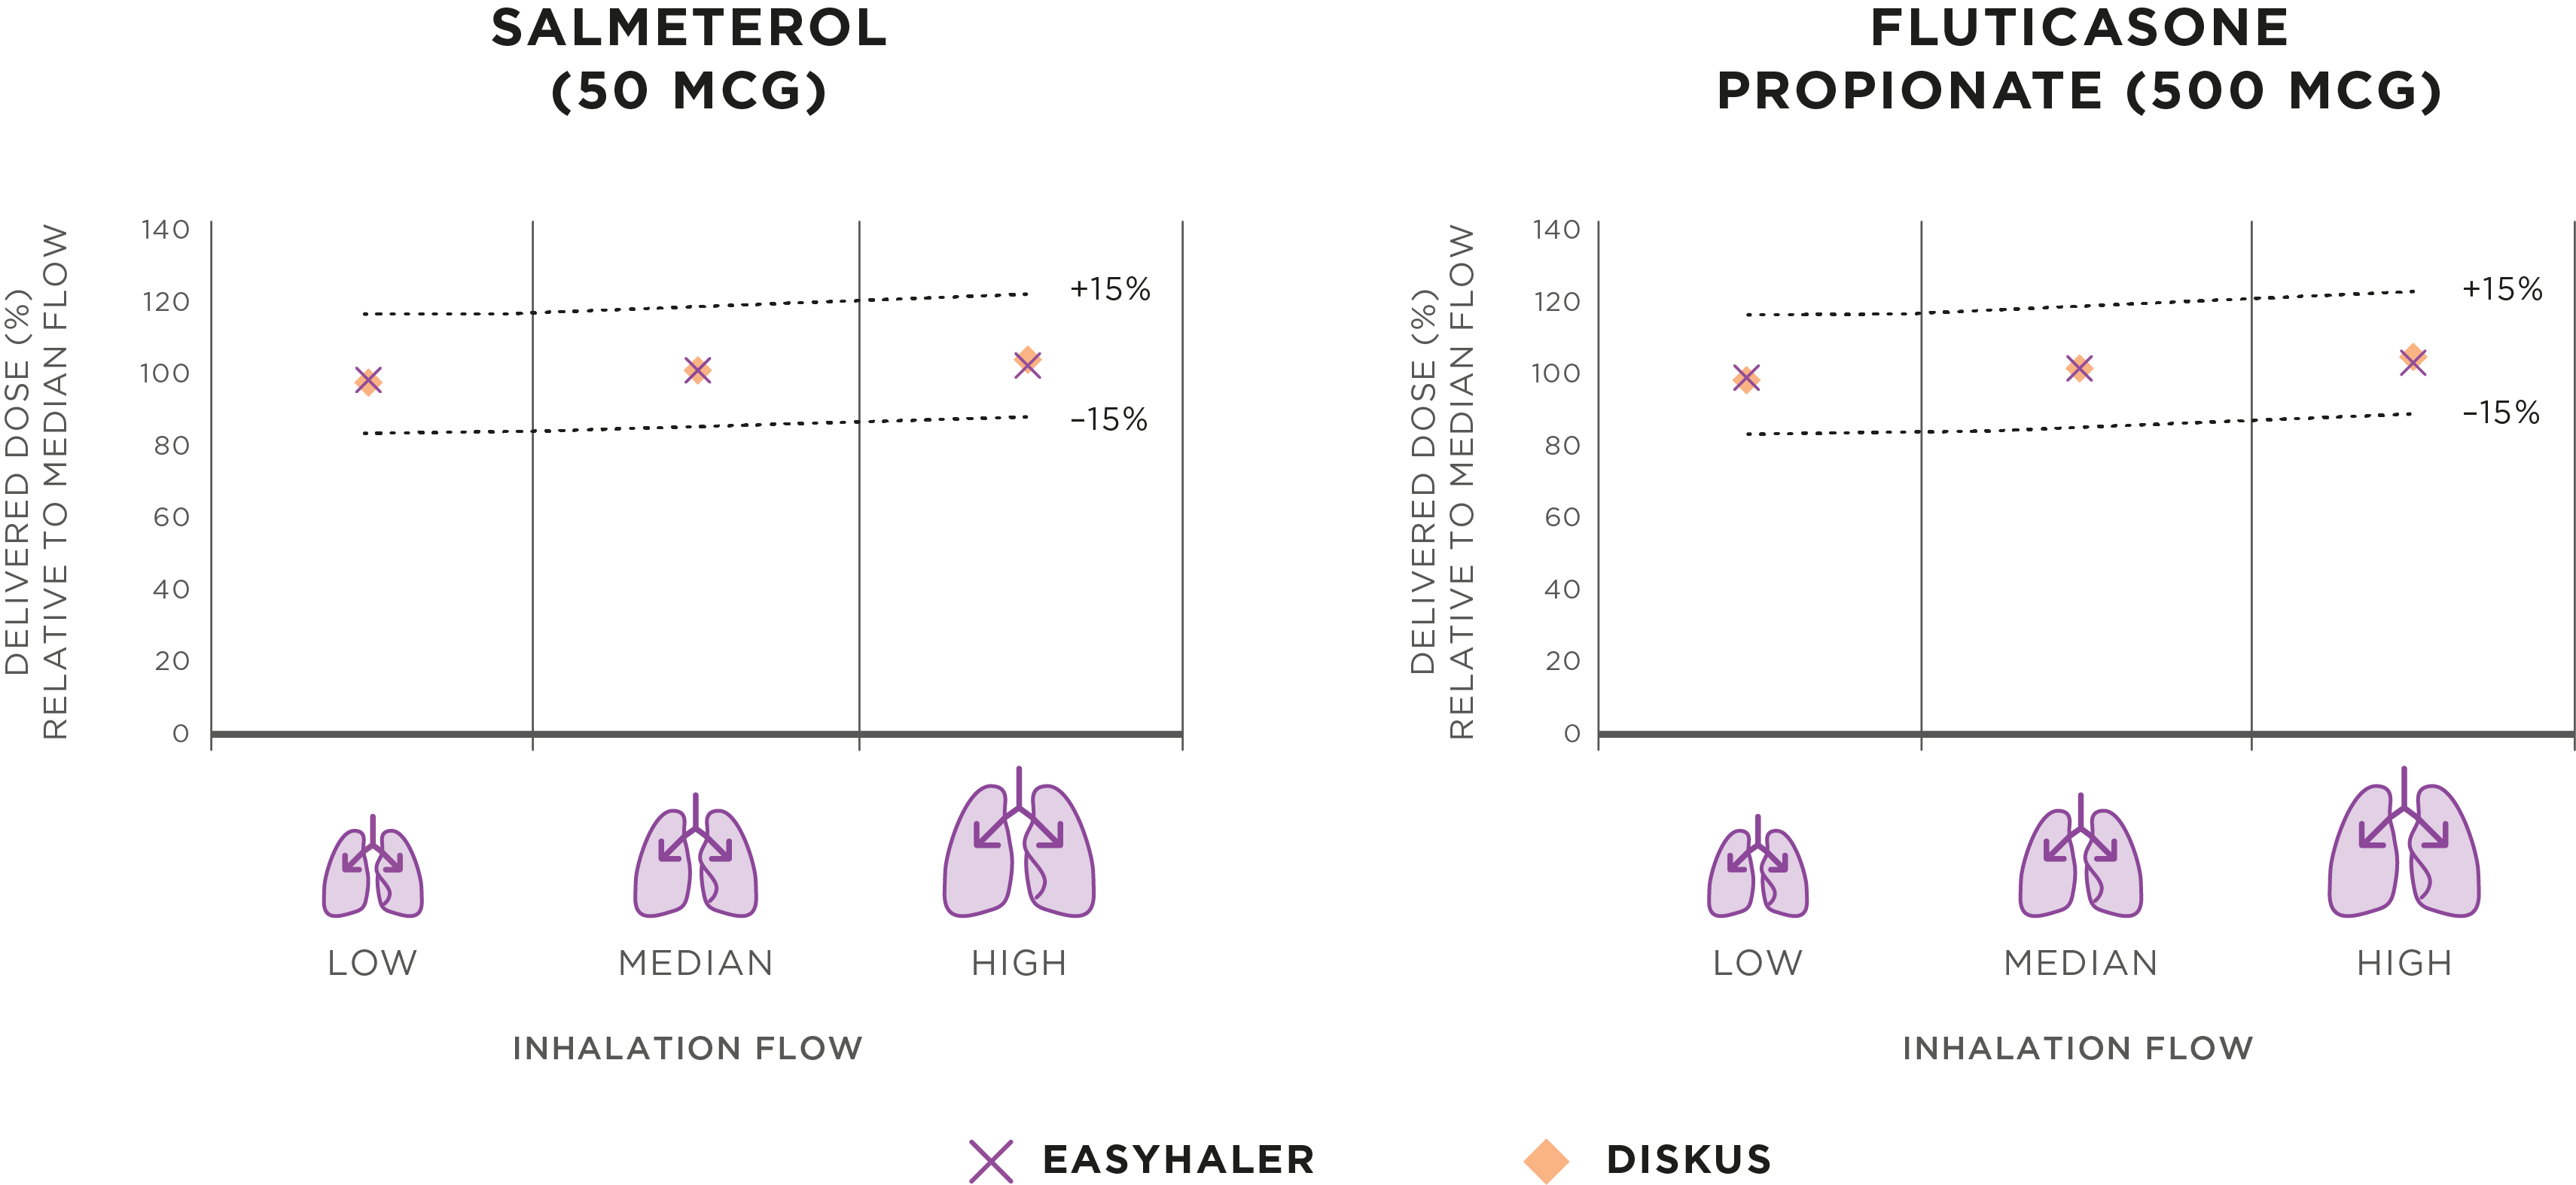 Figure 2. Salmeterol/fluticasone Easyhaler offers consistent dosing across asthma and COPD patient inhalation flow rates.3 